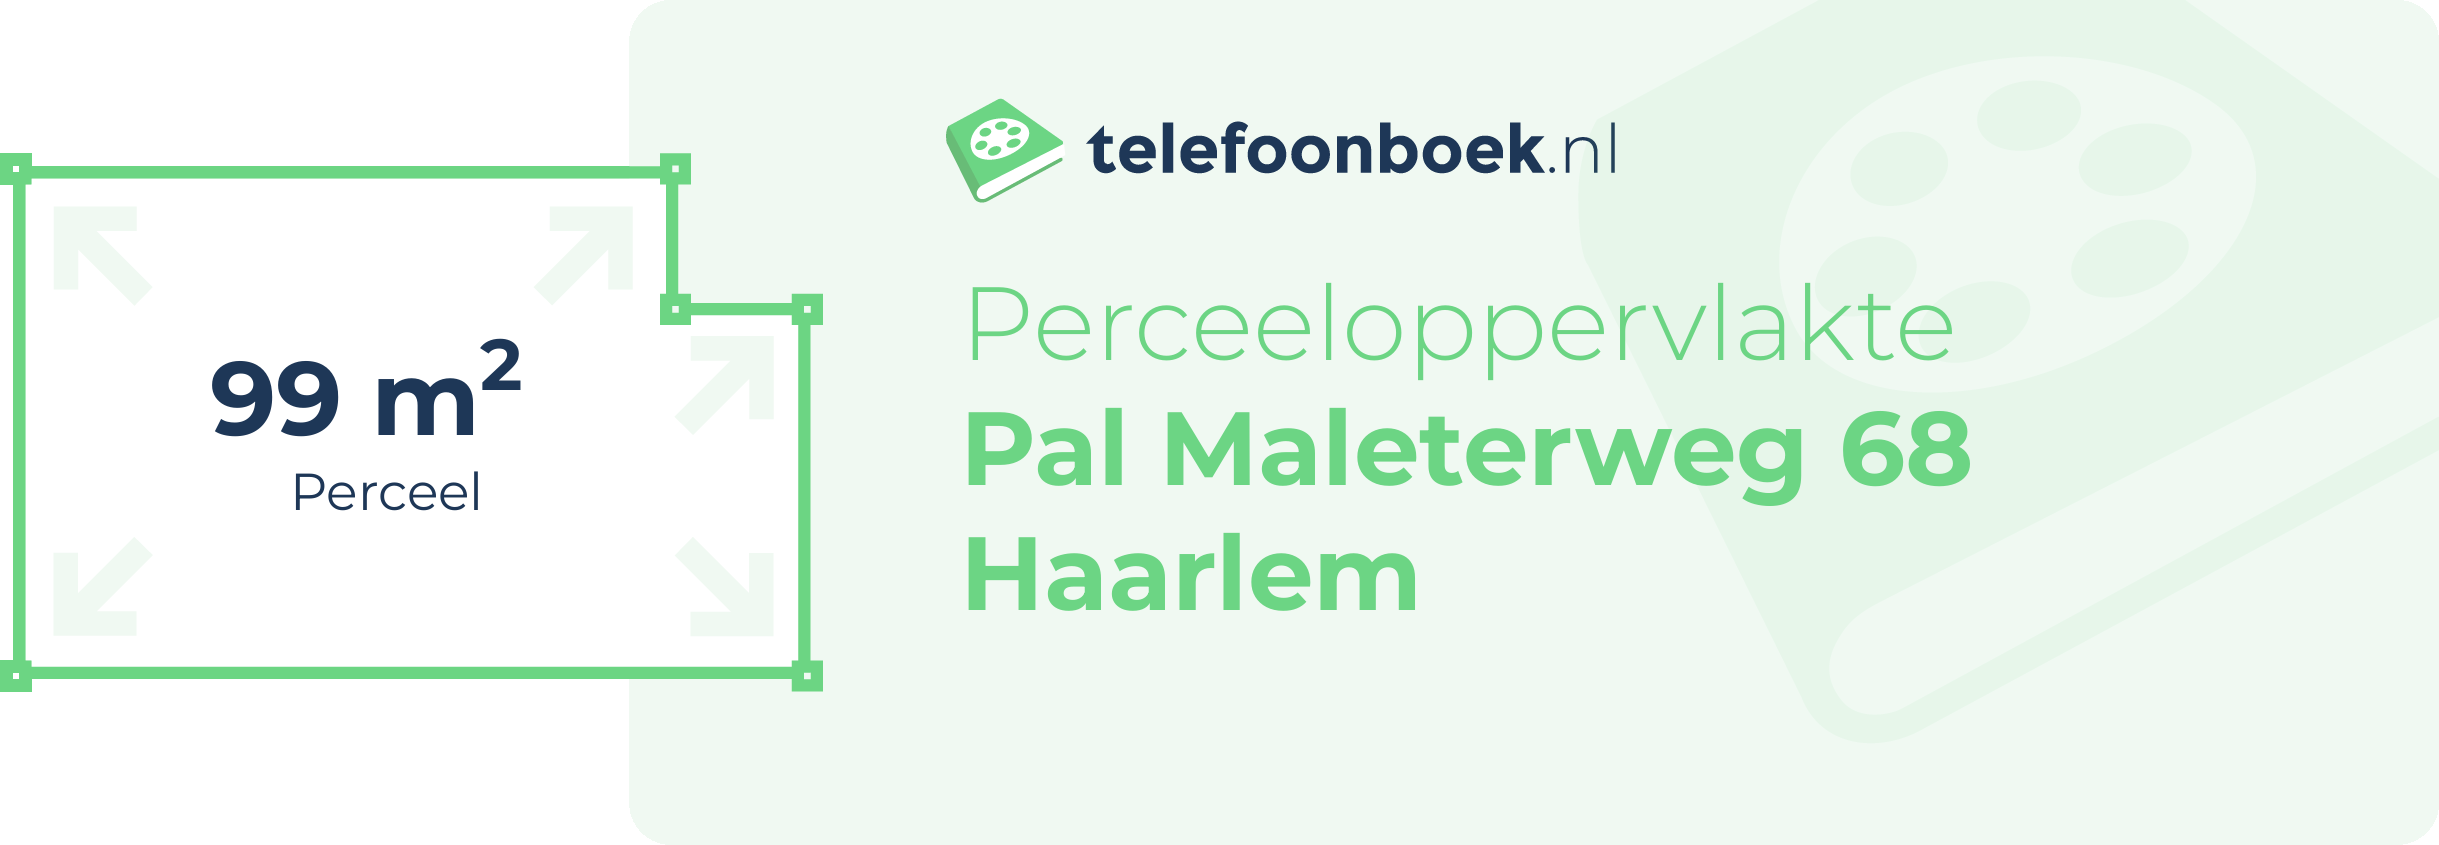 Perceeloppervlakte Pal Maleterweg 68 Haarlem